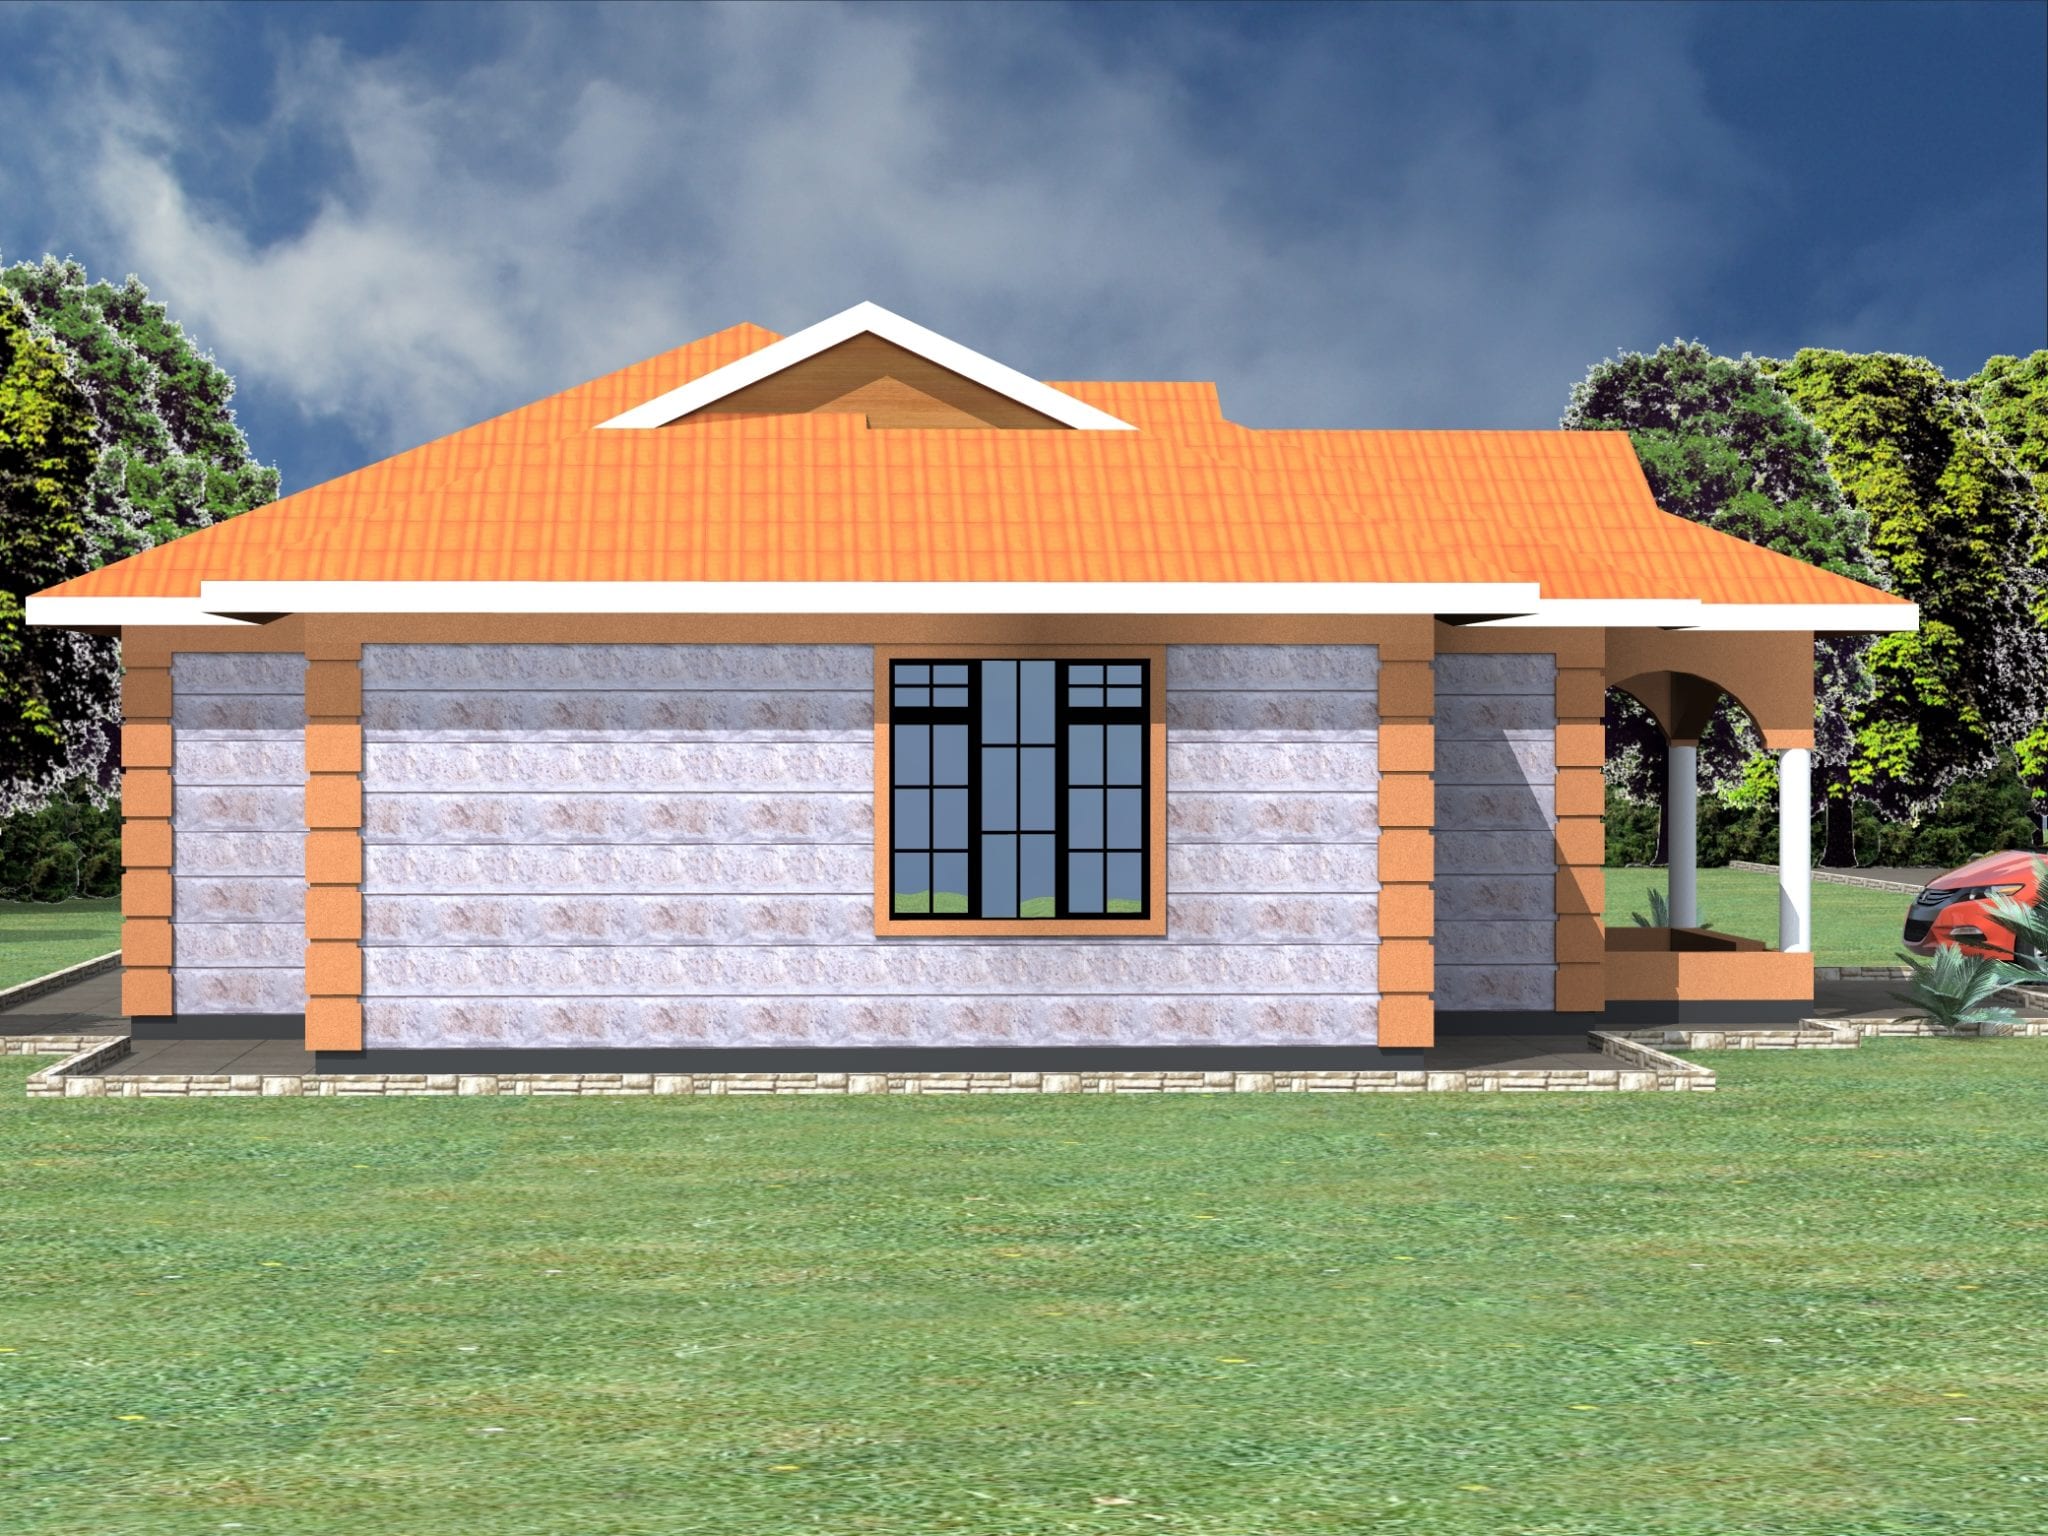 Bedroom Building In Of A 3 Cost House Rural Kenya